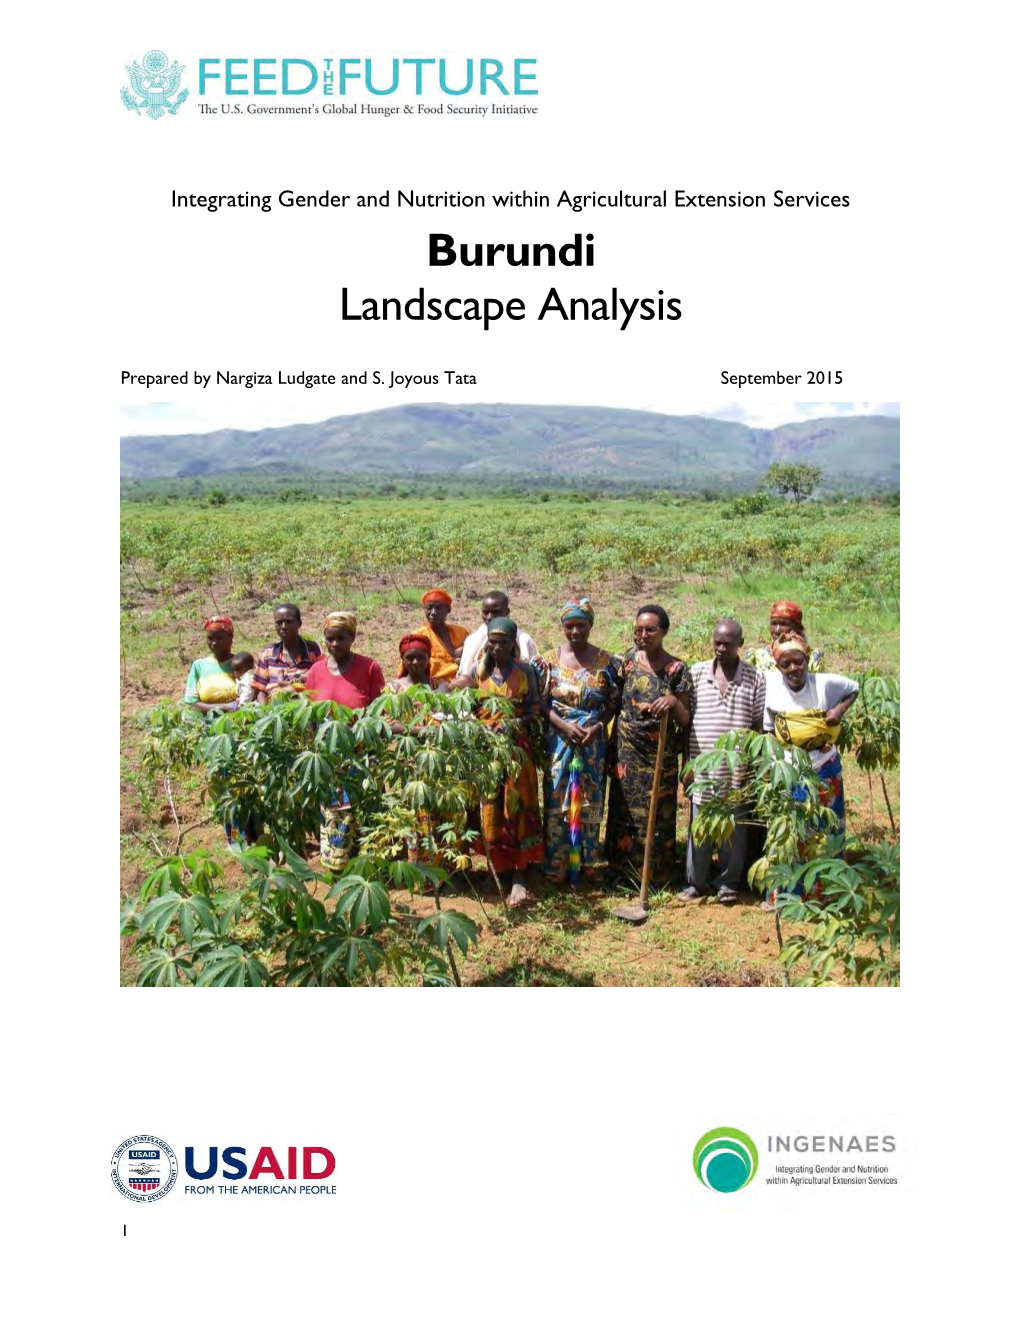 Burundi Landscape Analysis